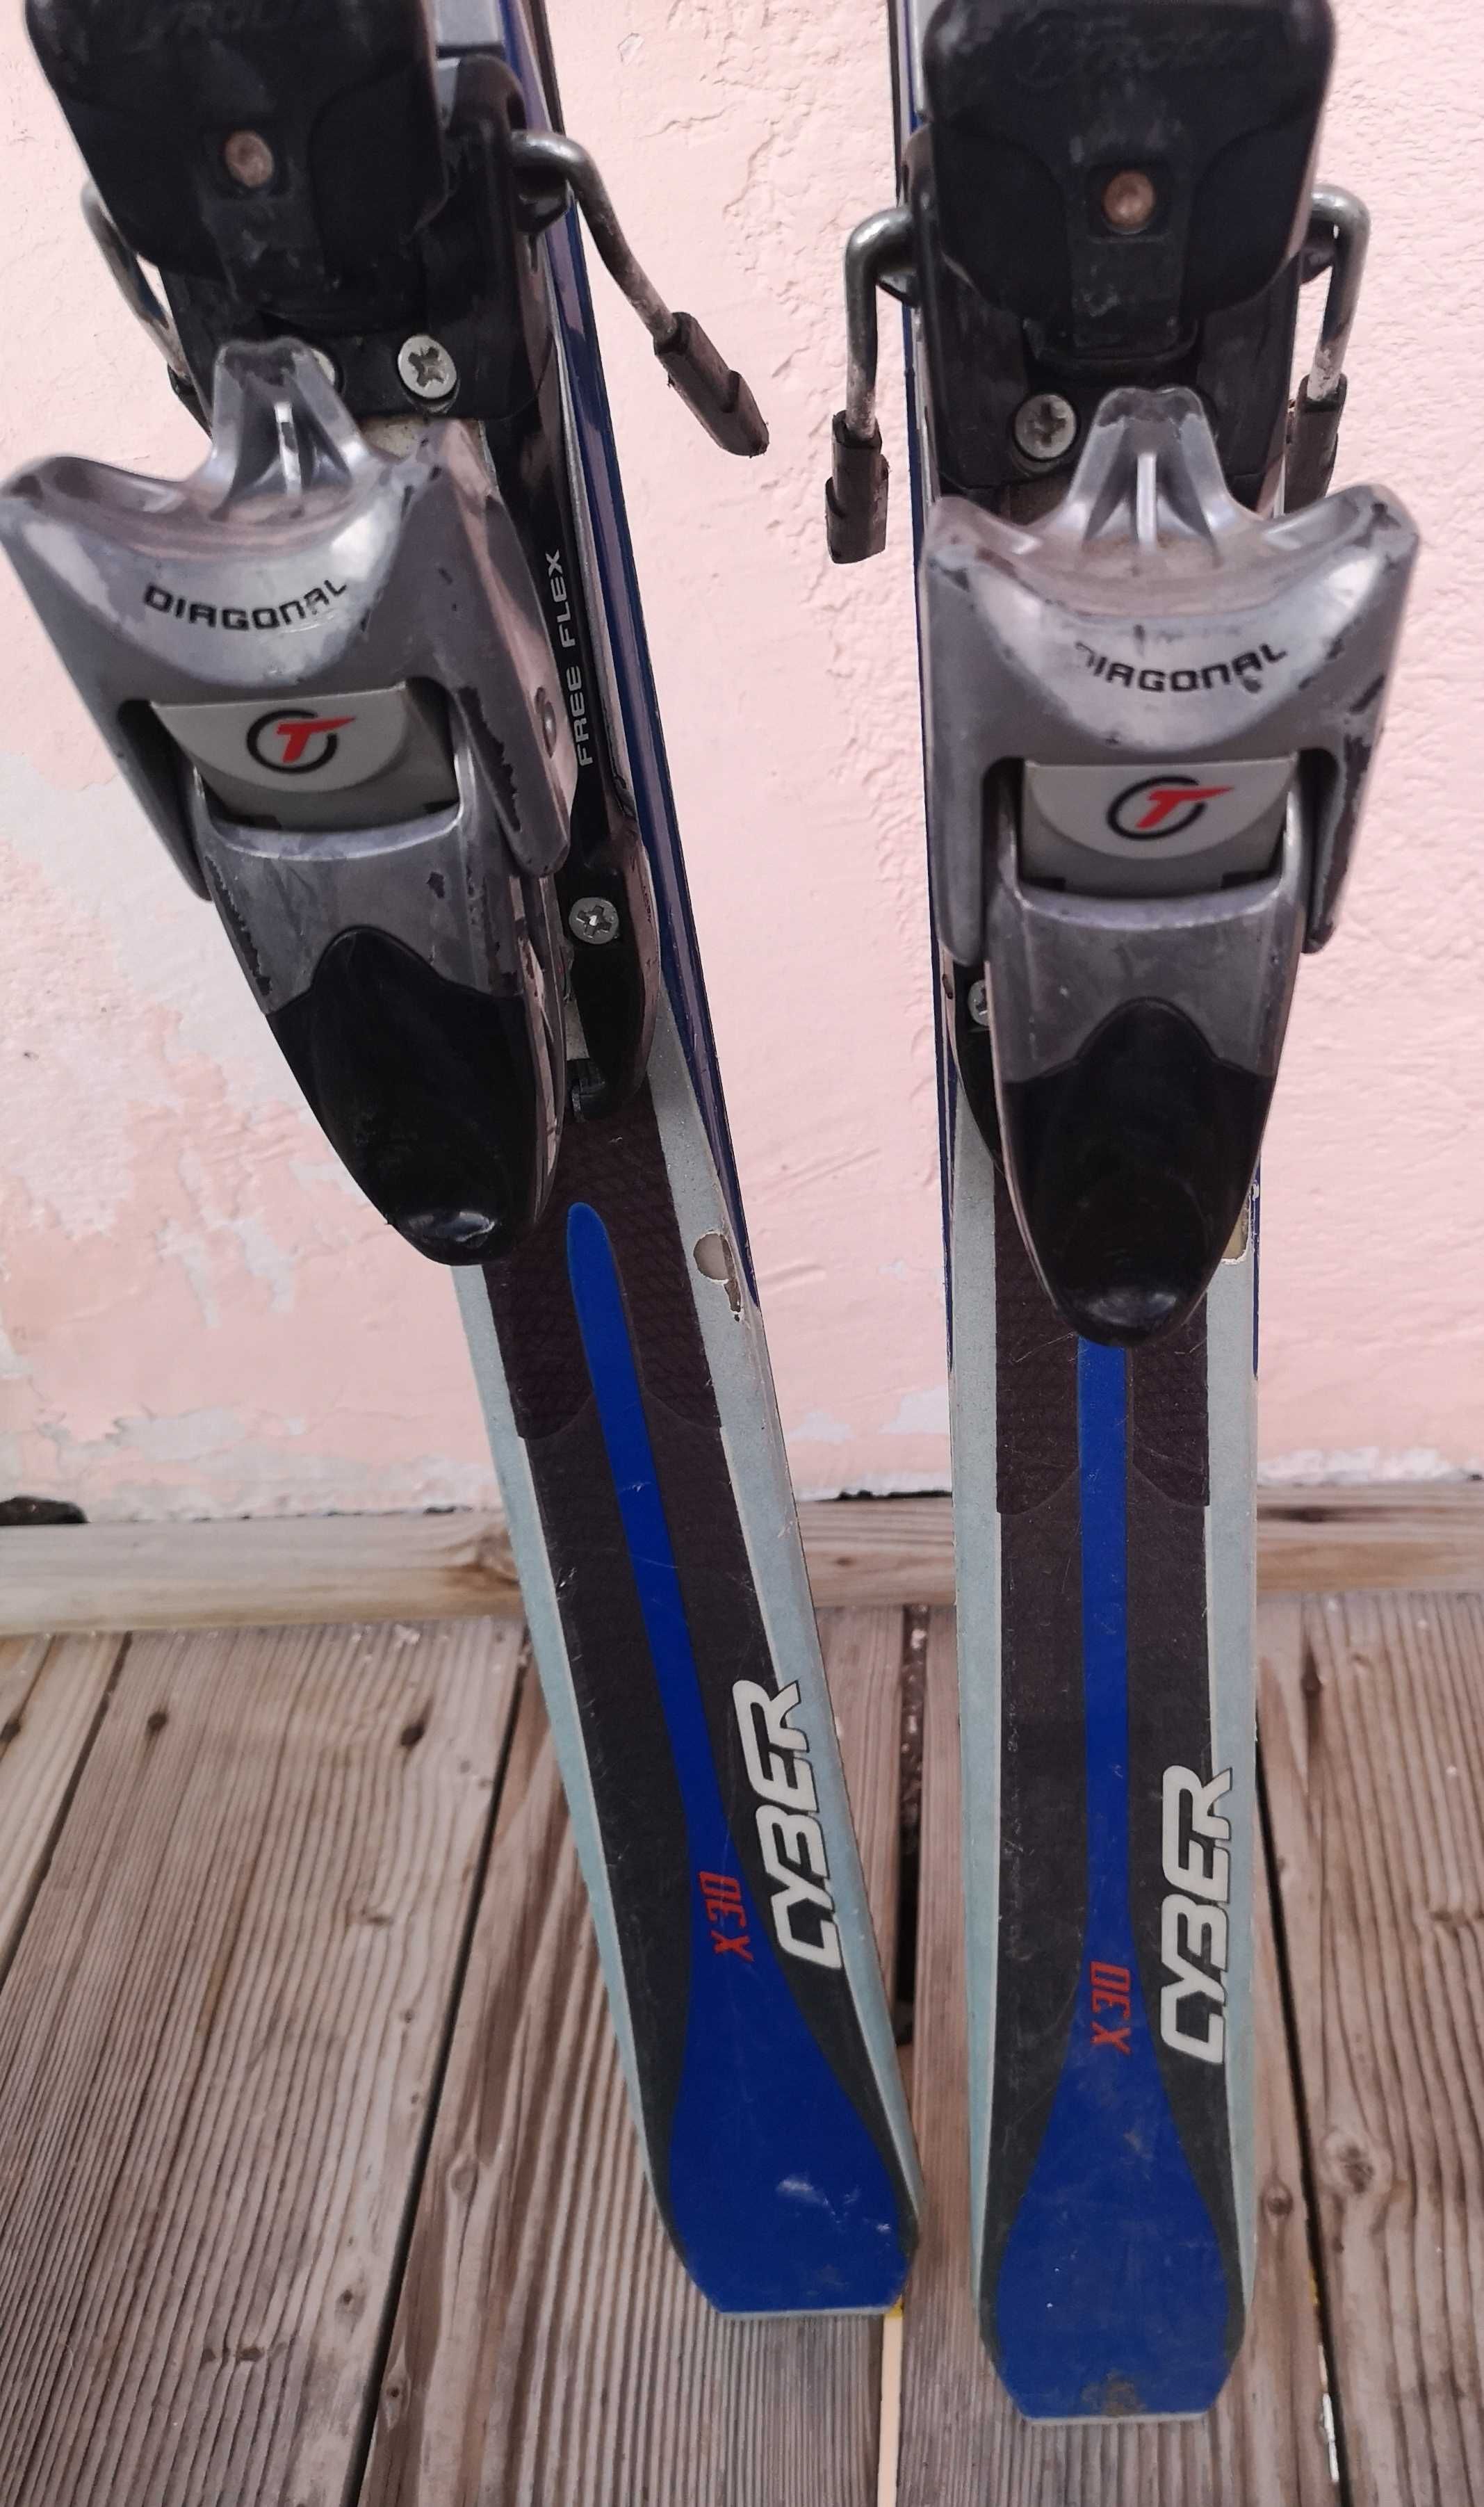 Echipament ski: clapari, skiuri, casca, pantaloni